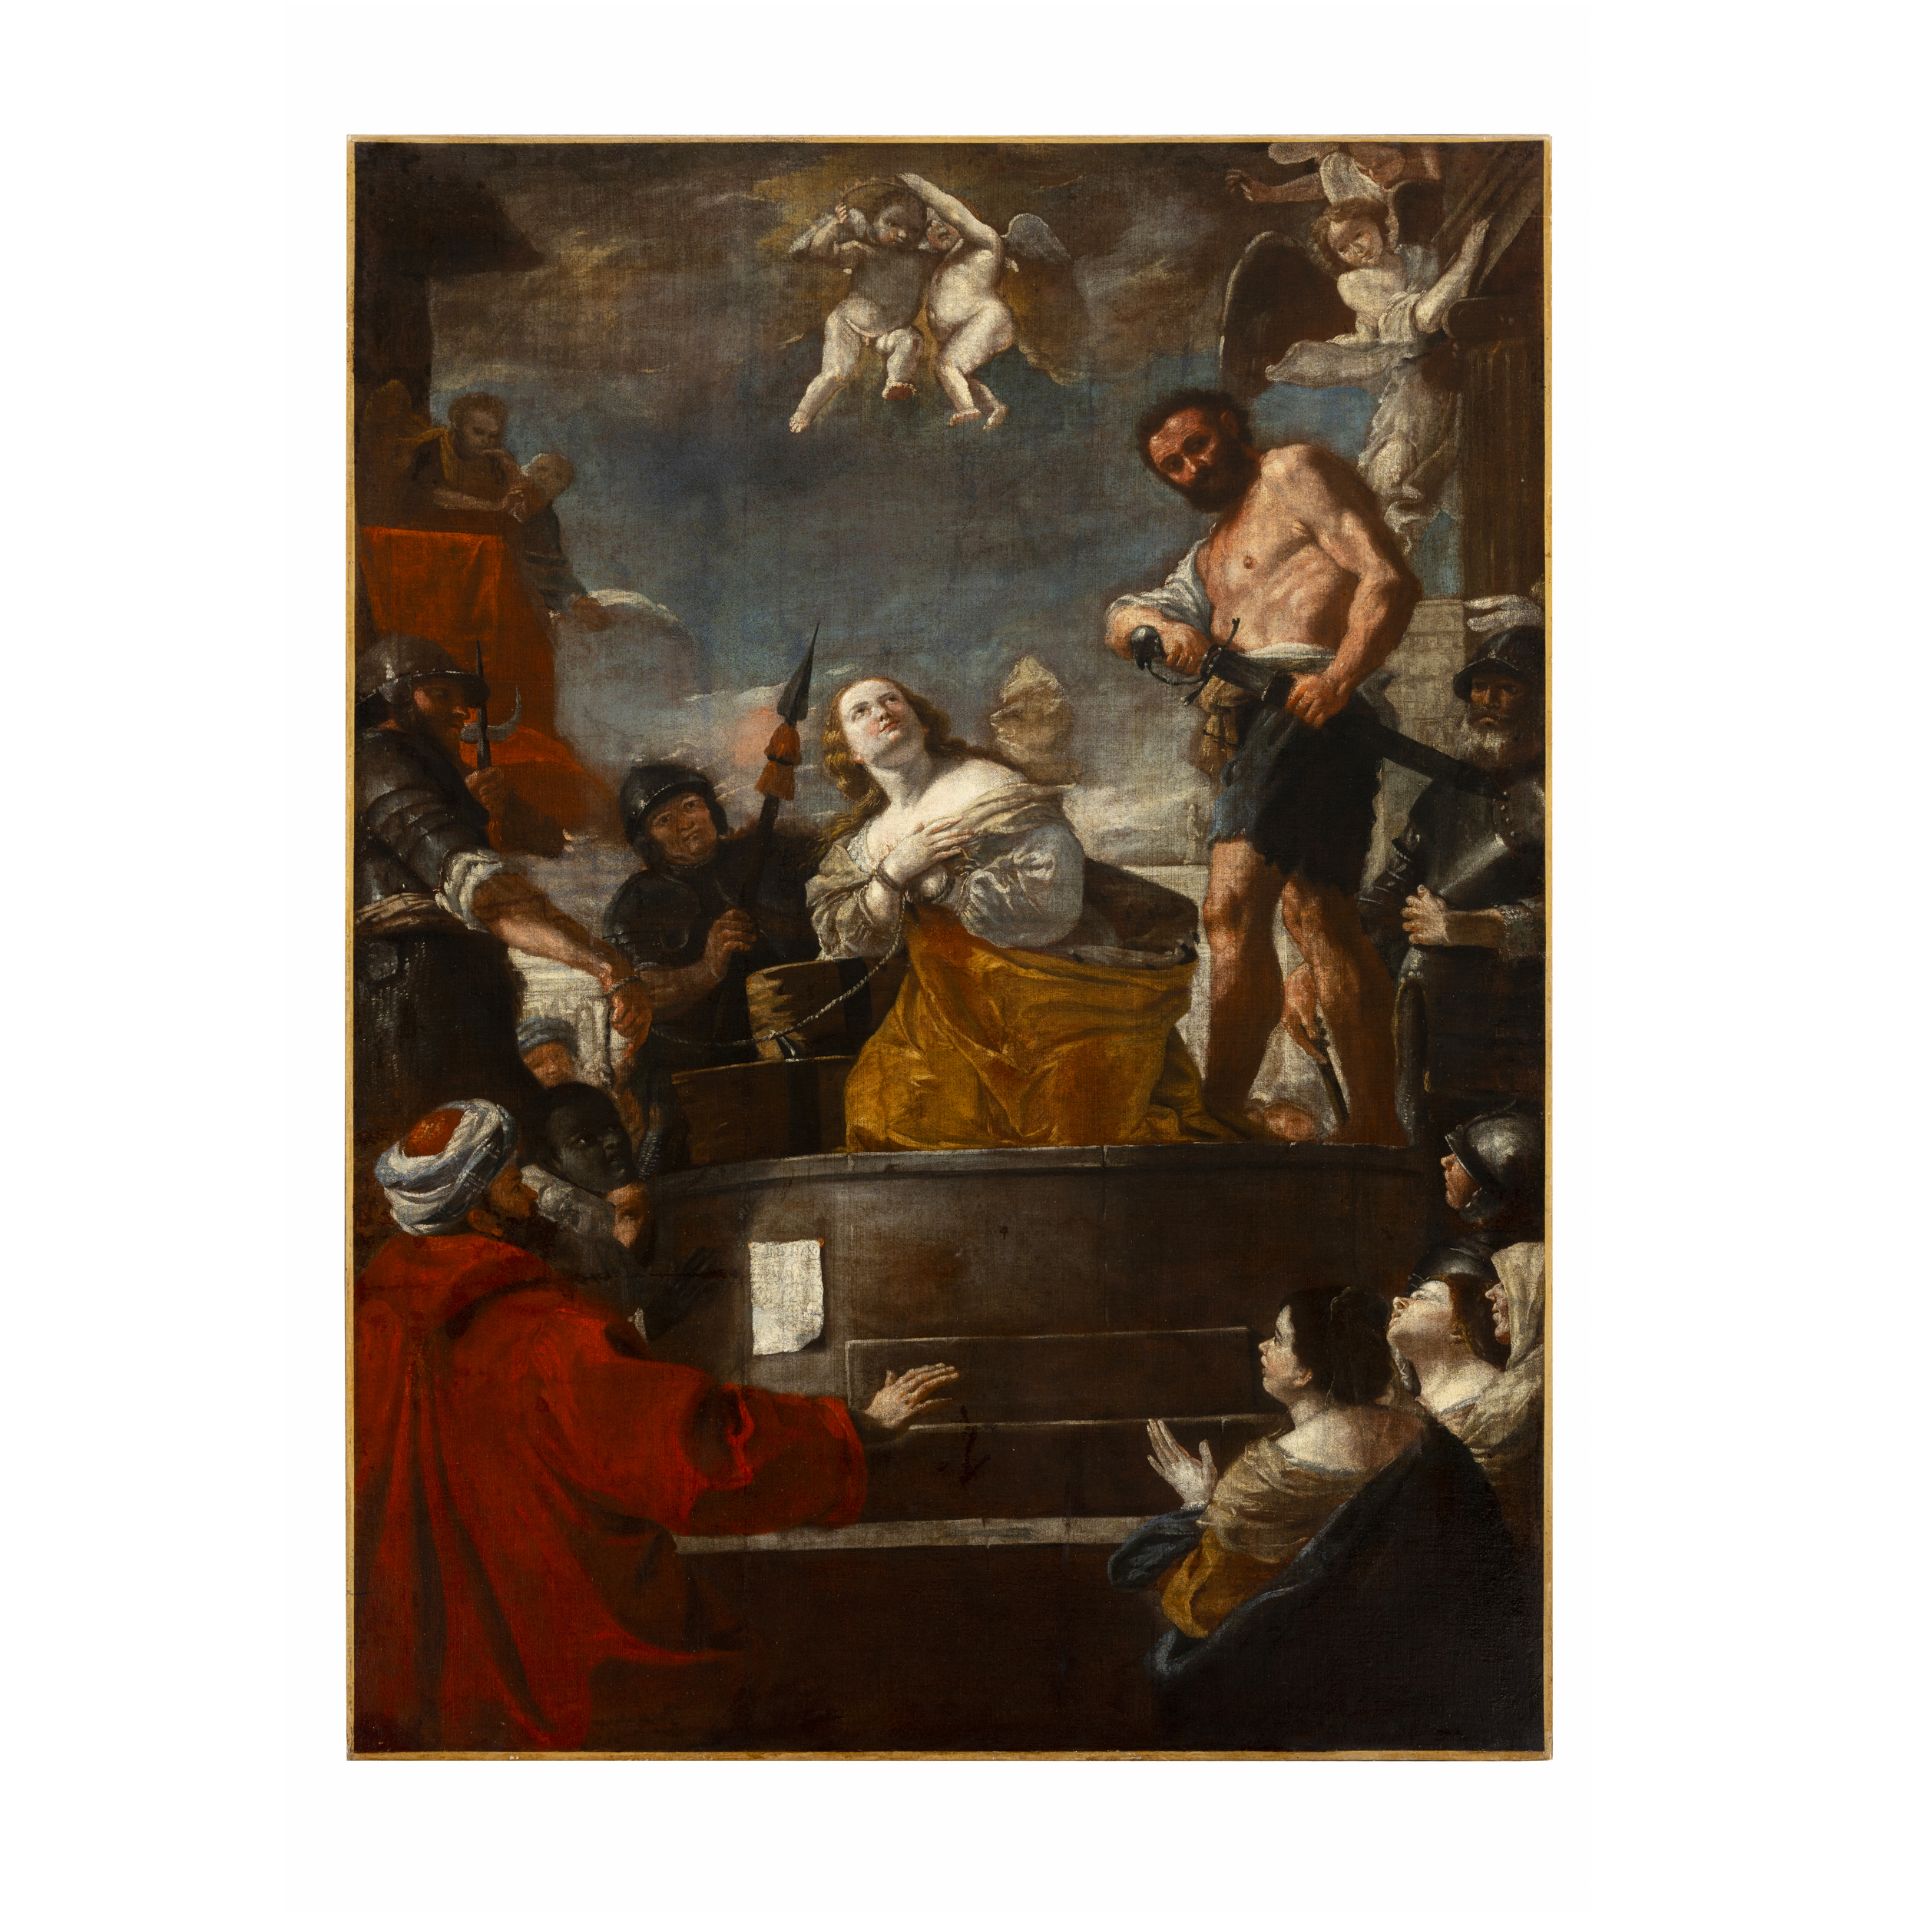 Mattia Preti (Taverna 1613 - La Valletta 1699) bottega di